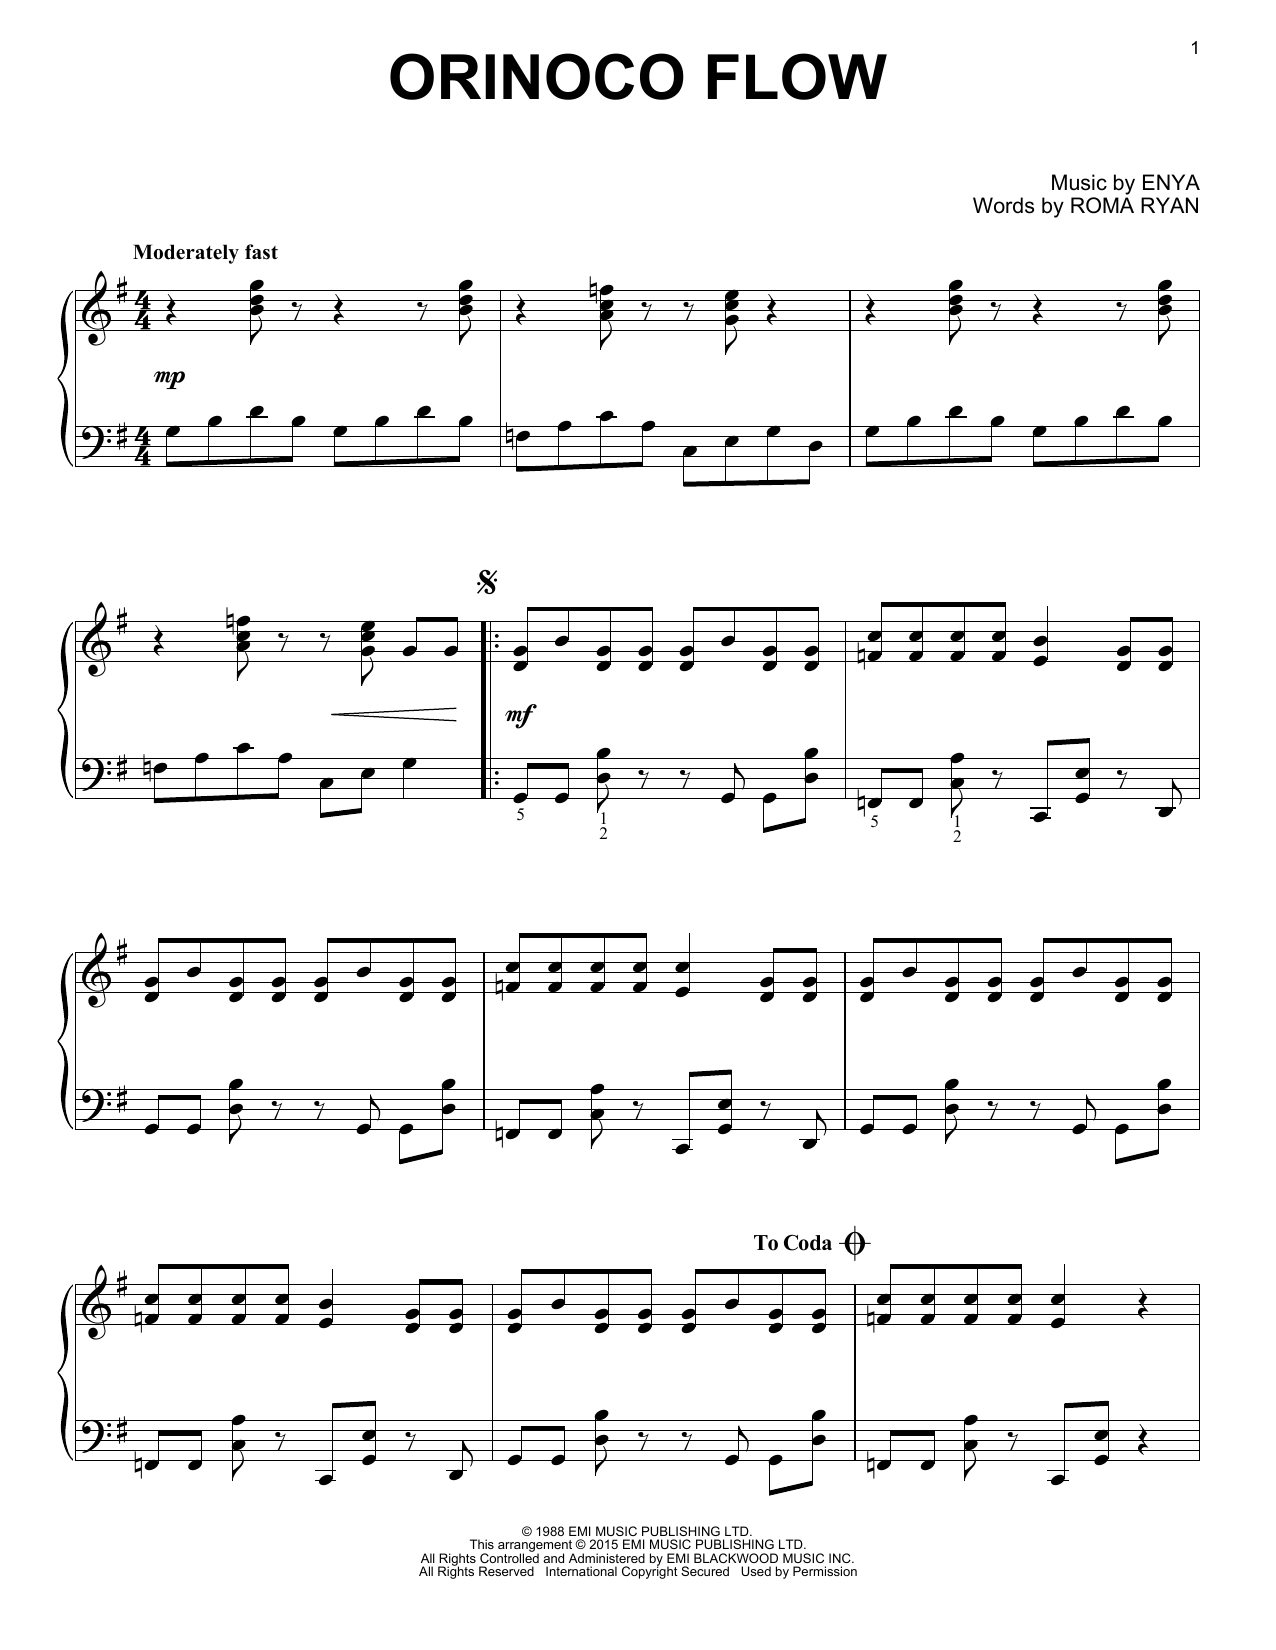 Enya Orinoco Flow Sheet Music Notes & Chords for Piano - Download or Print PDF